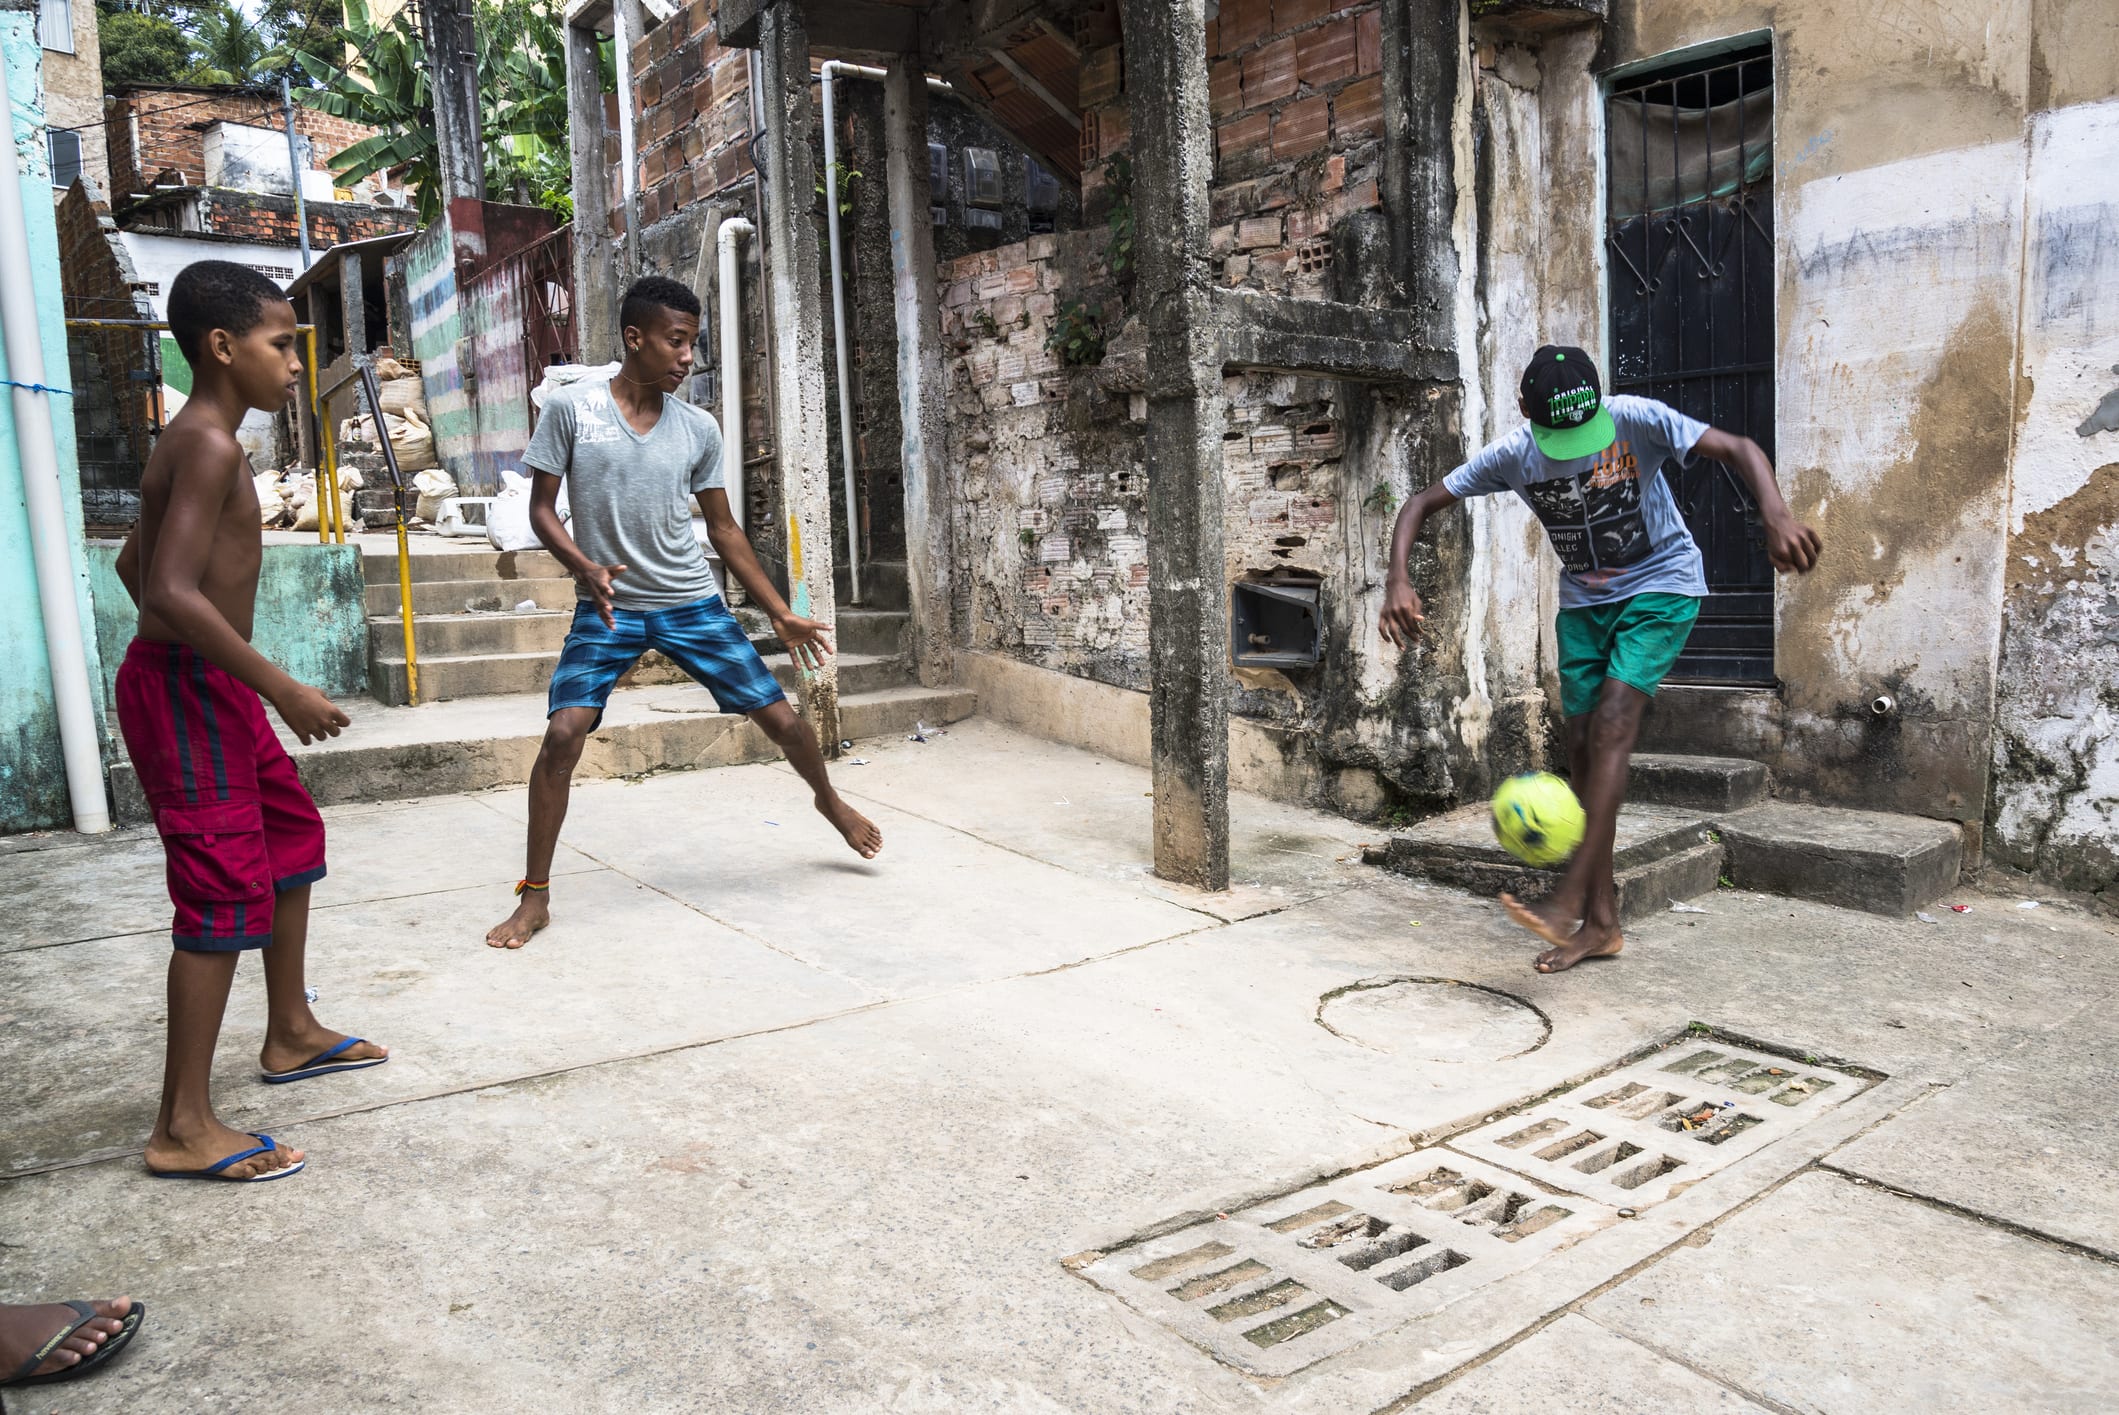 Boys playing football in the poor neighbourhoood, Salvador, Bahia, Brazil